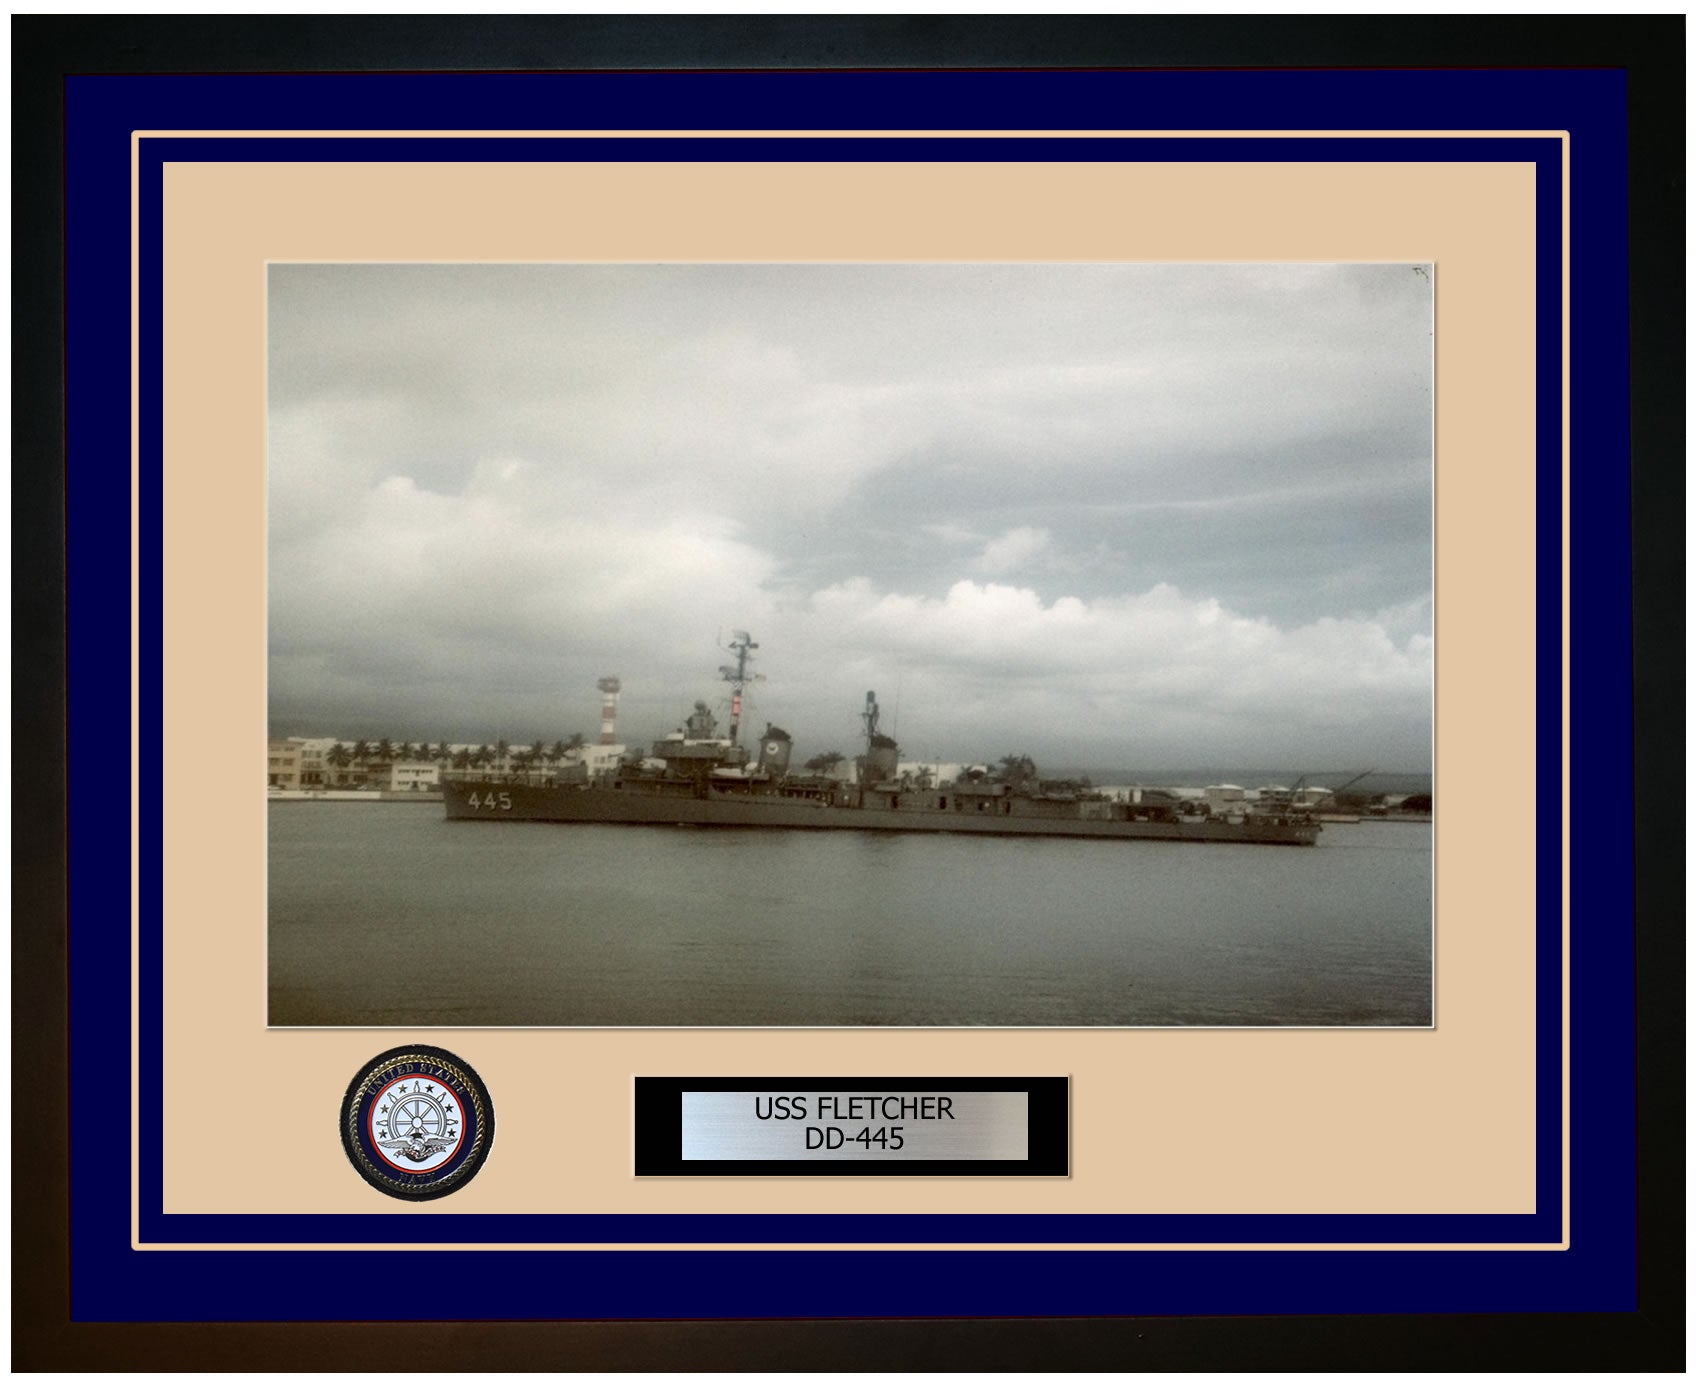 USS FLETCHER DD-445 Framed Navy Ship Photo Blue